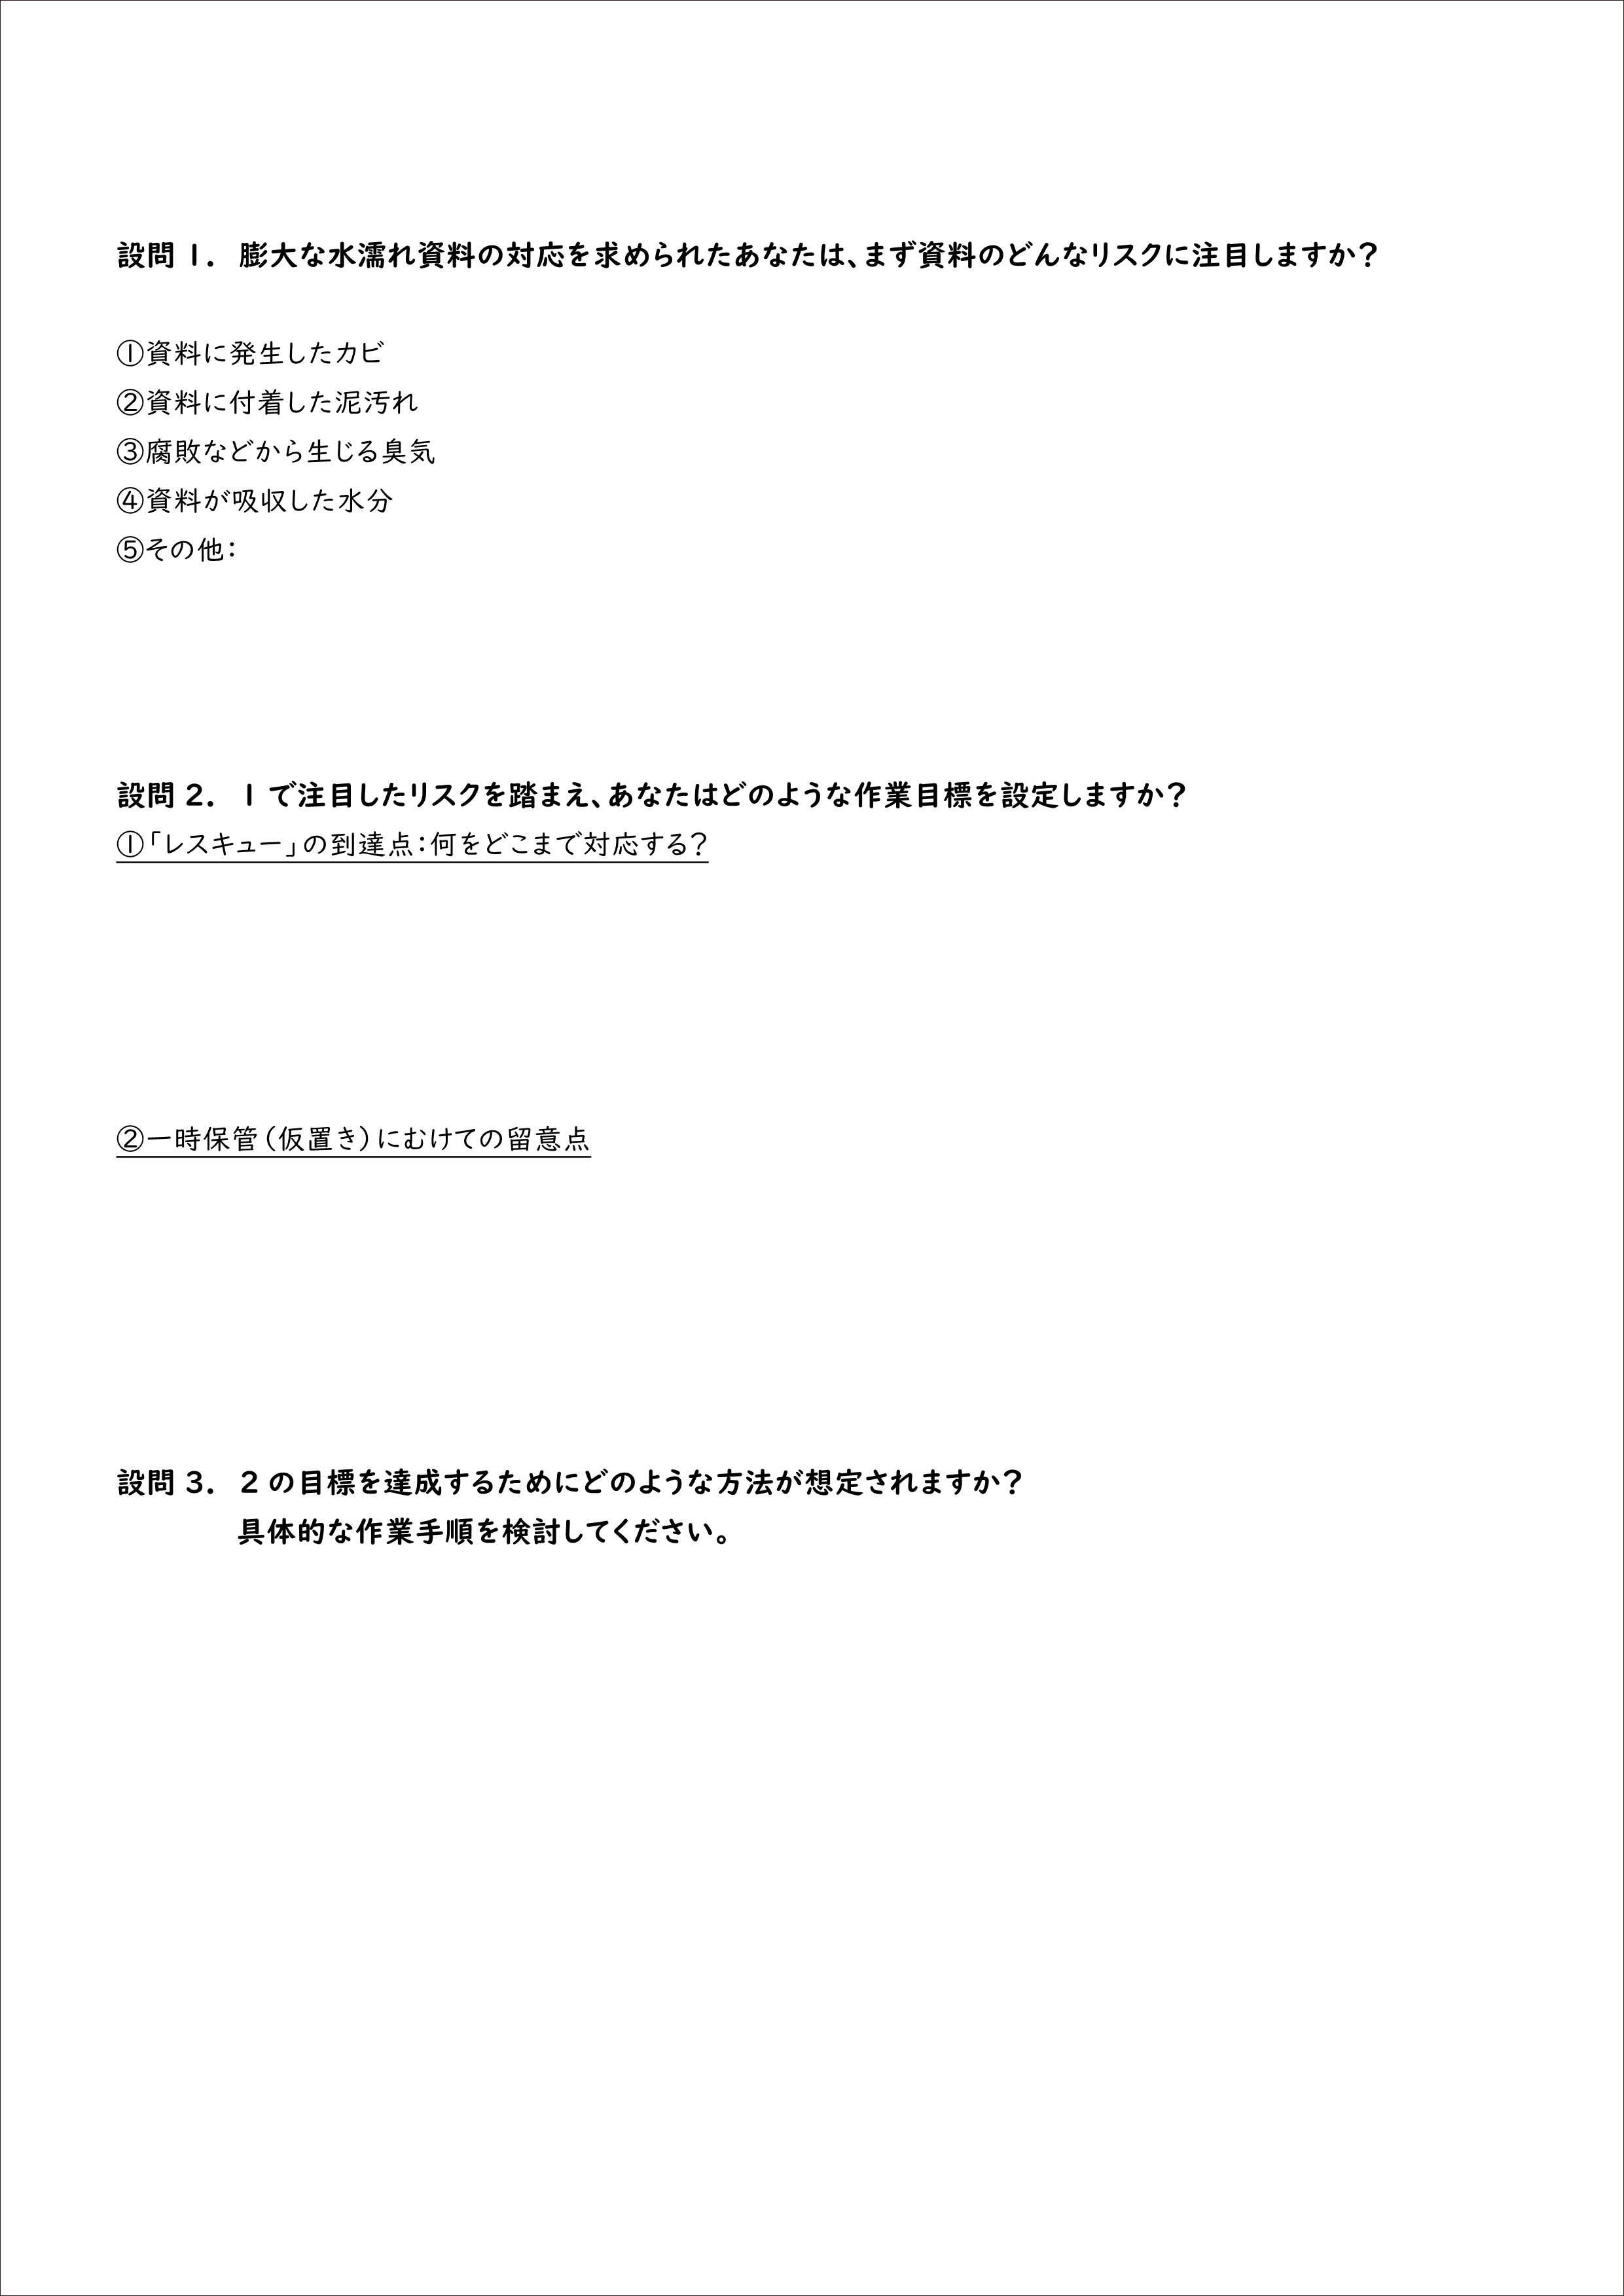 https://bungaku-report.com/image/d41155367914ae308d47d6649cf027185734ff8e.jpg